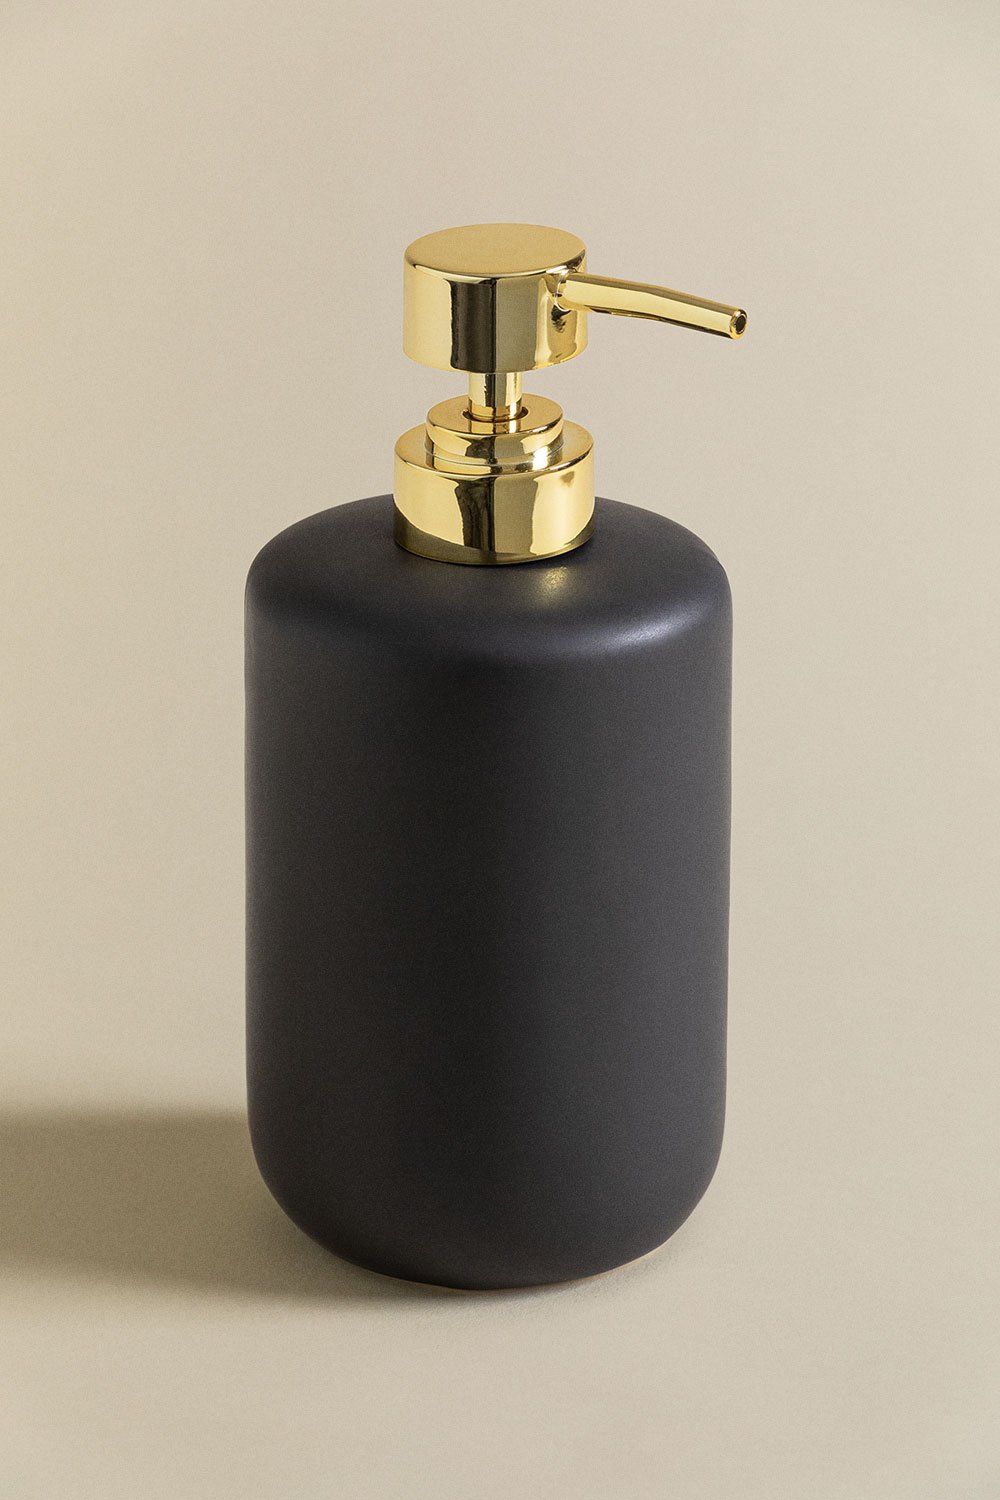 Pierk ceramic soap dispenser, gallery image 1